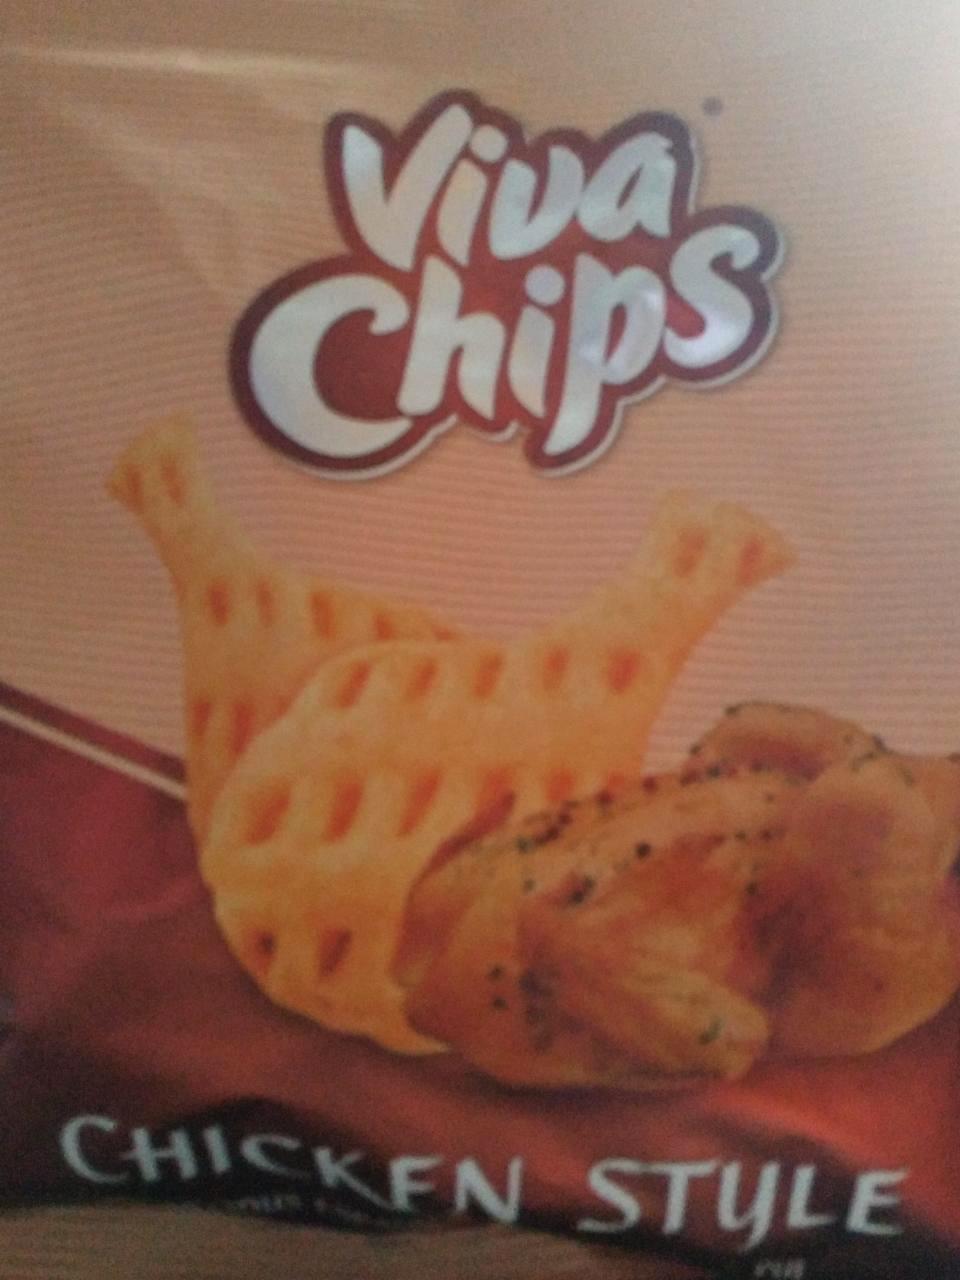 Fotografie - Viva chips chicken style